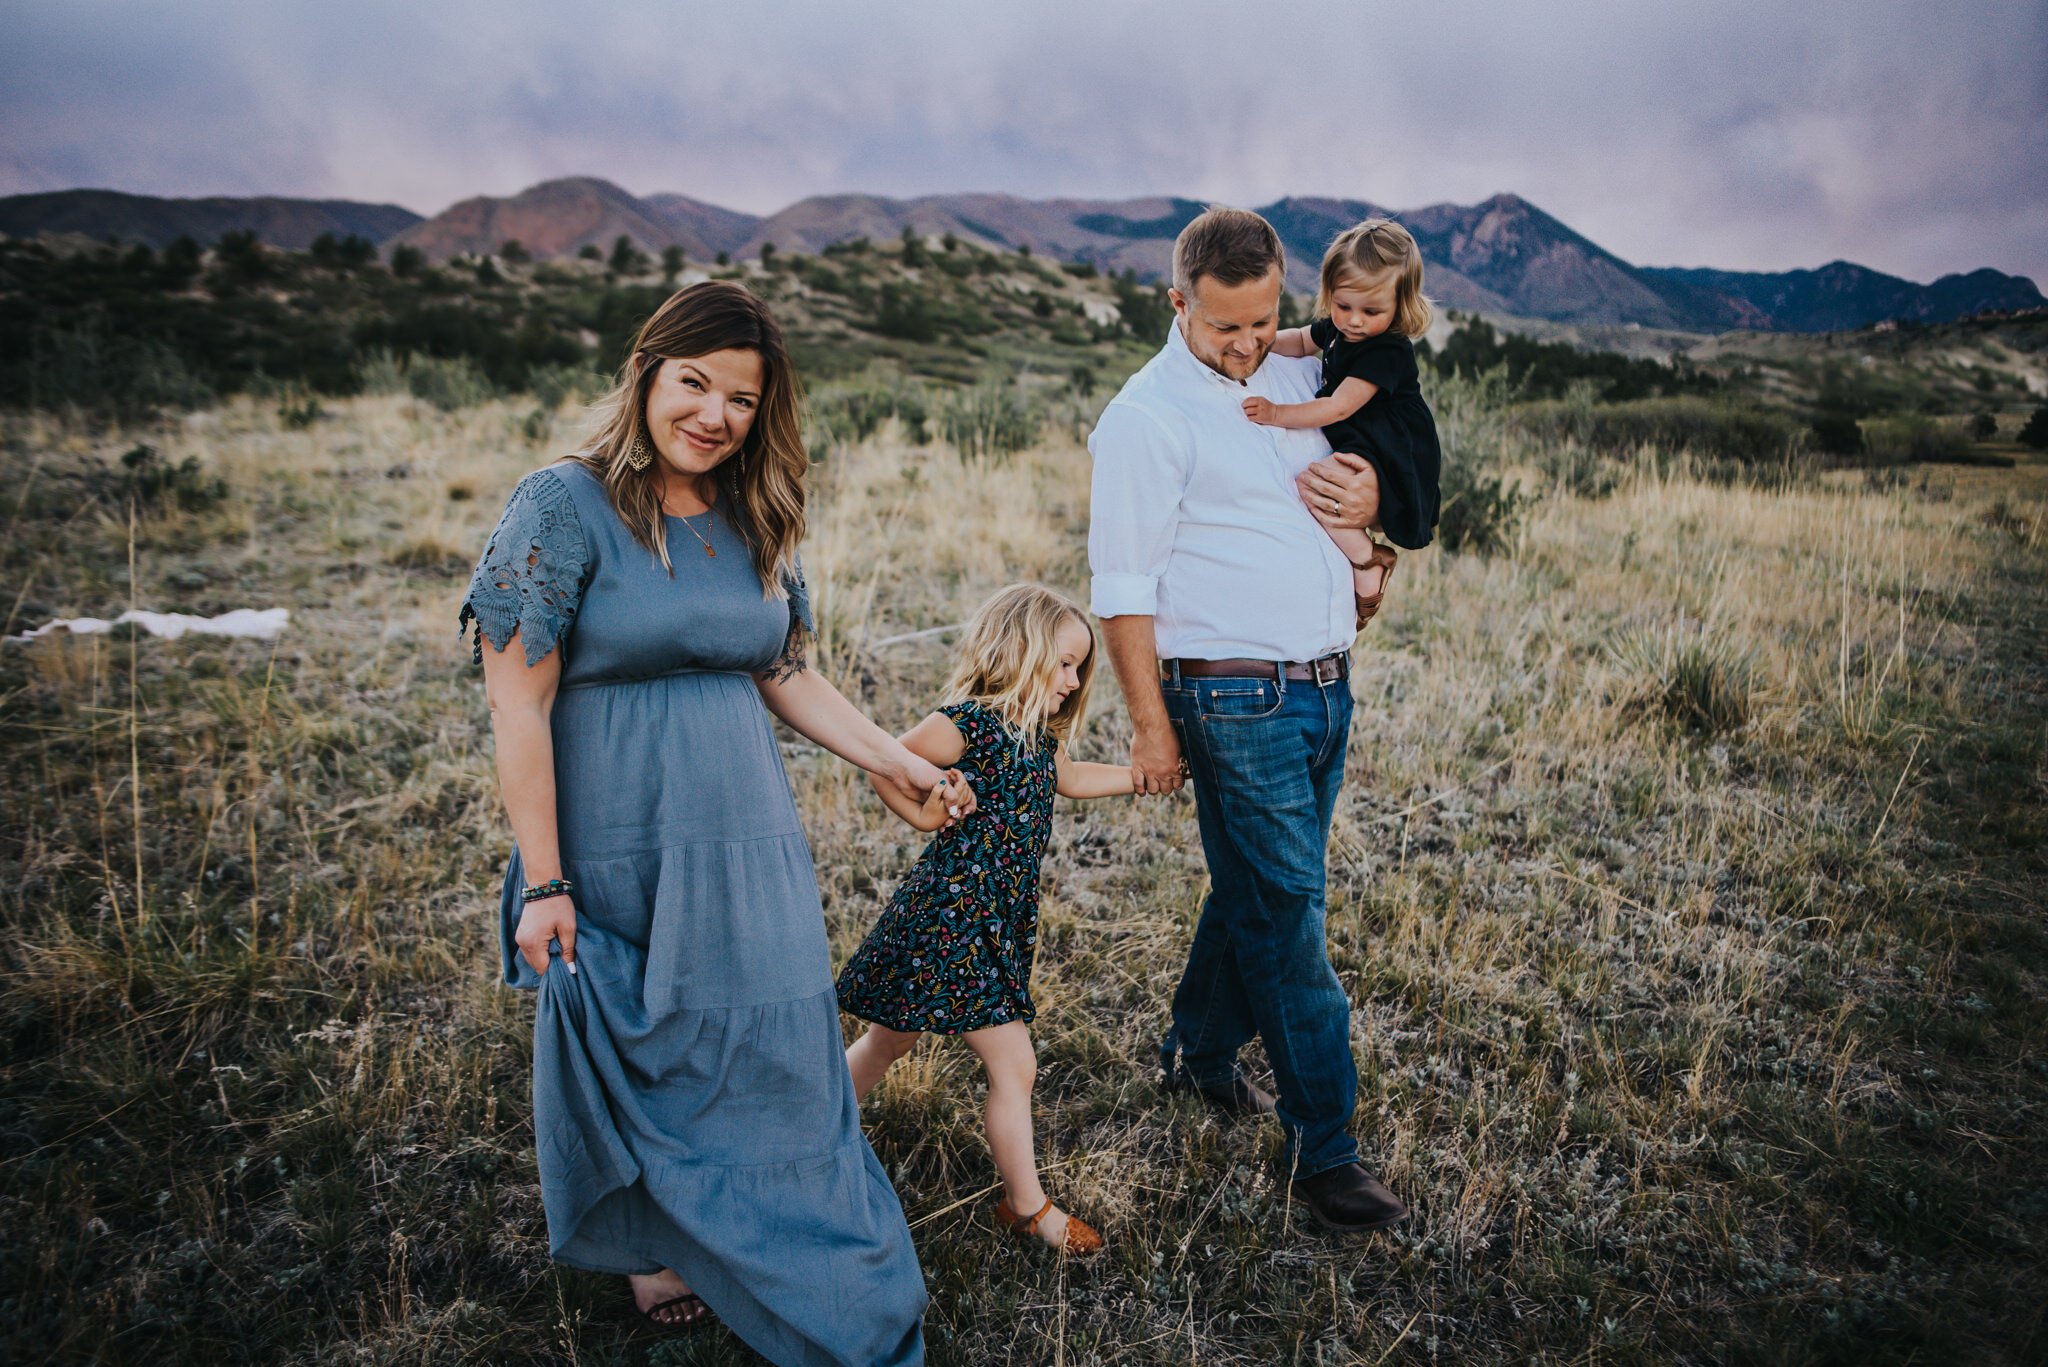 Mary+Lousia+Wiencek+Family+Session+Colorado+Springs+Colorado+Sunset+Mom+Dad+Daughters+Ute+Valley+Park+Wild+Prairie+Photography-26-2020.jpeg